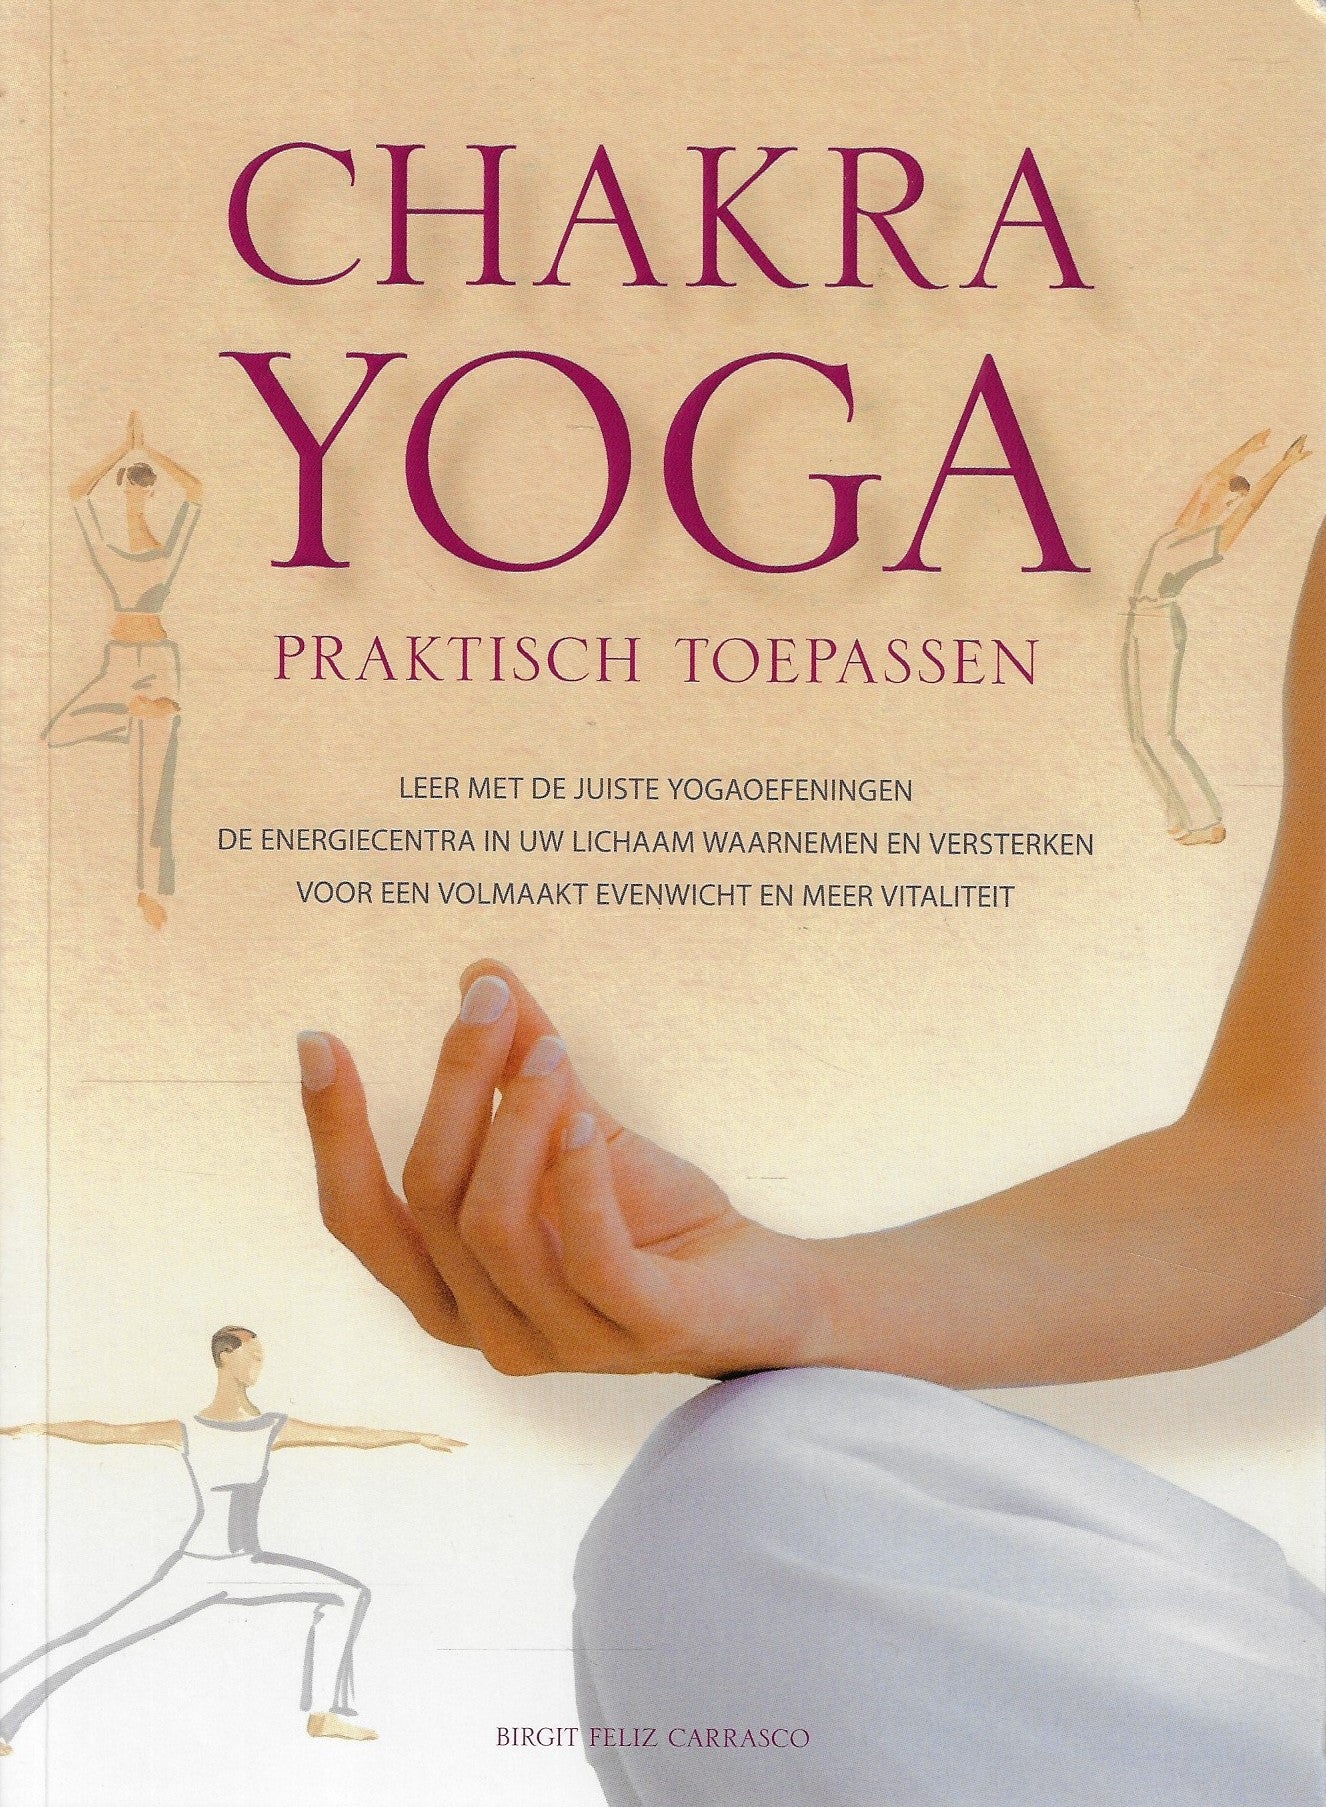 Chakra Yoga - praktisch toepassen